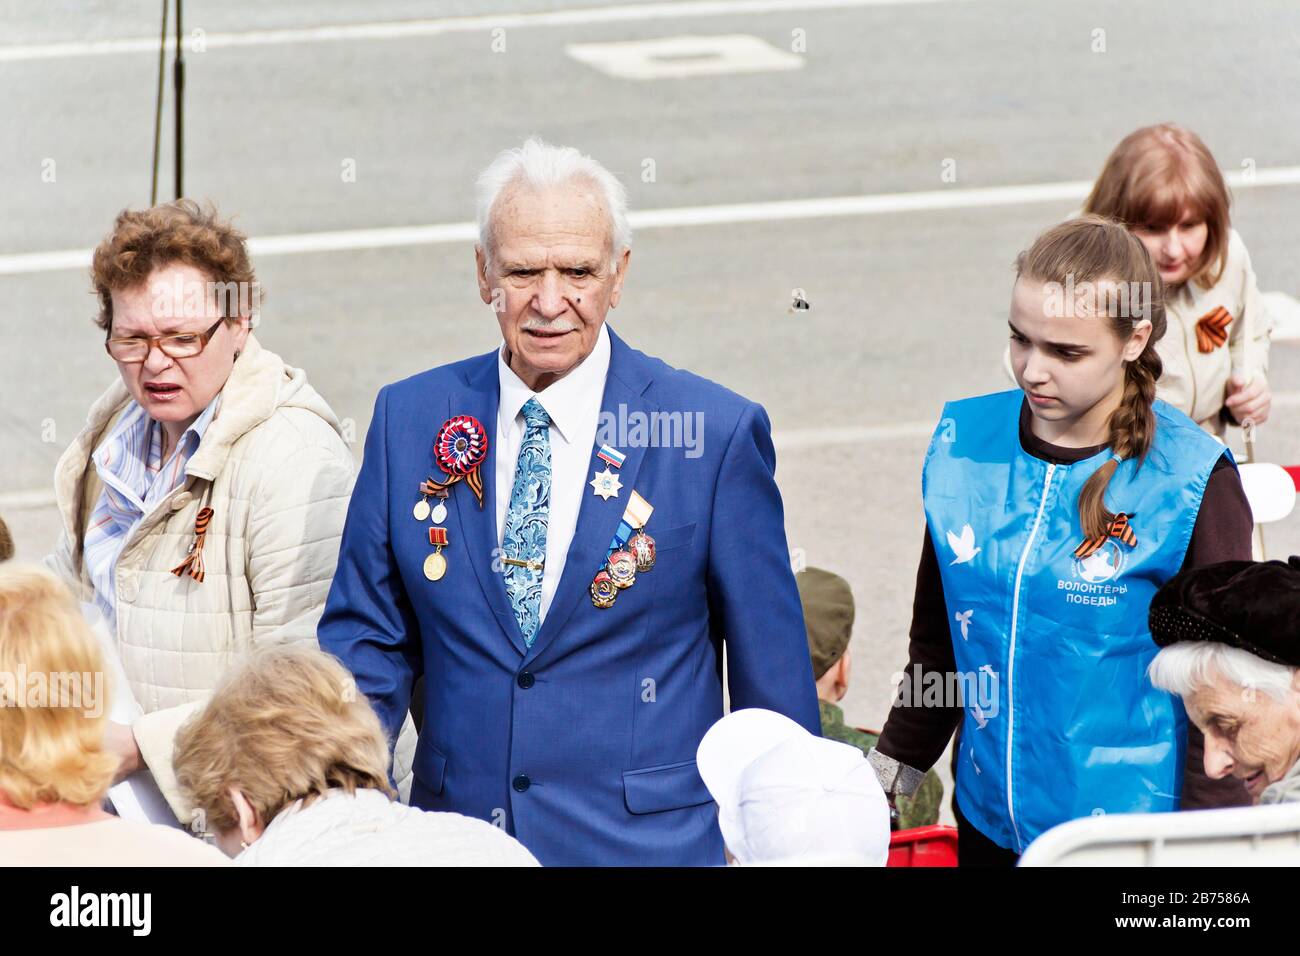 SAMARA, RUSSIA - MAY 9, 2017: Veteran on celebration at the parade annual Victory Day, May, 9, 2017 in Samara, Russia Stock Photo